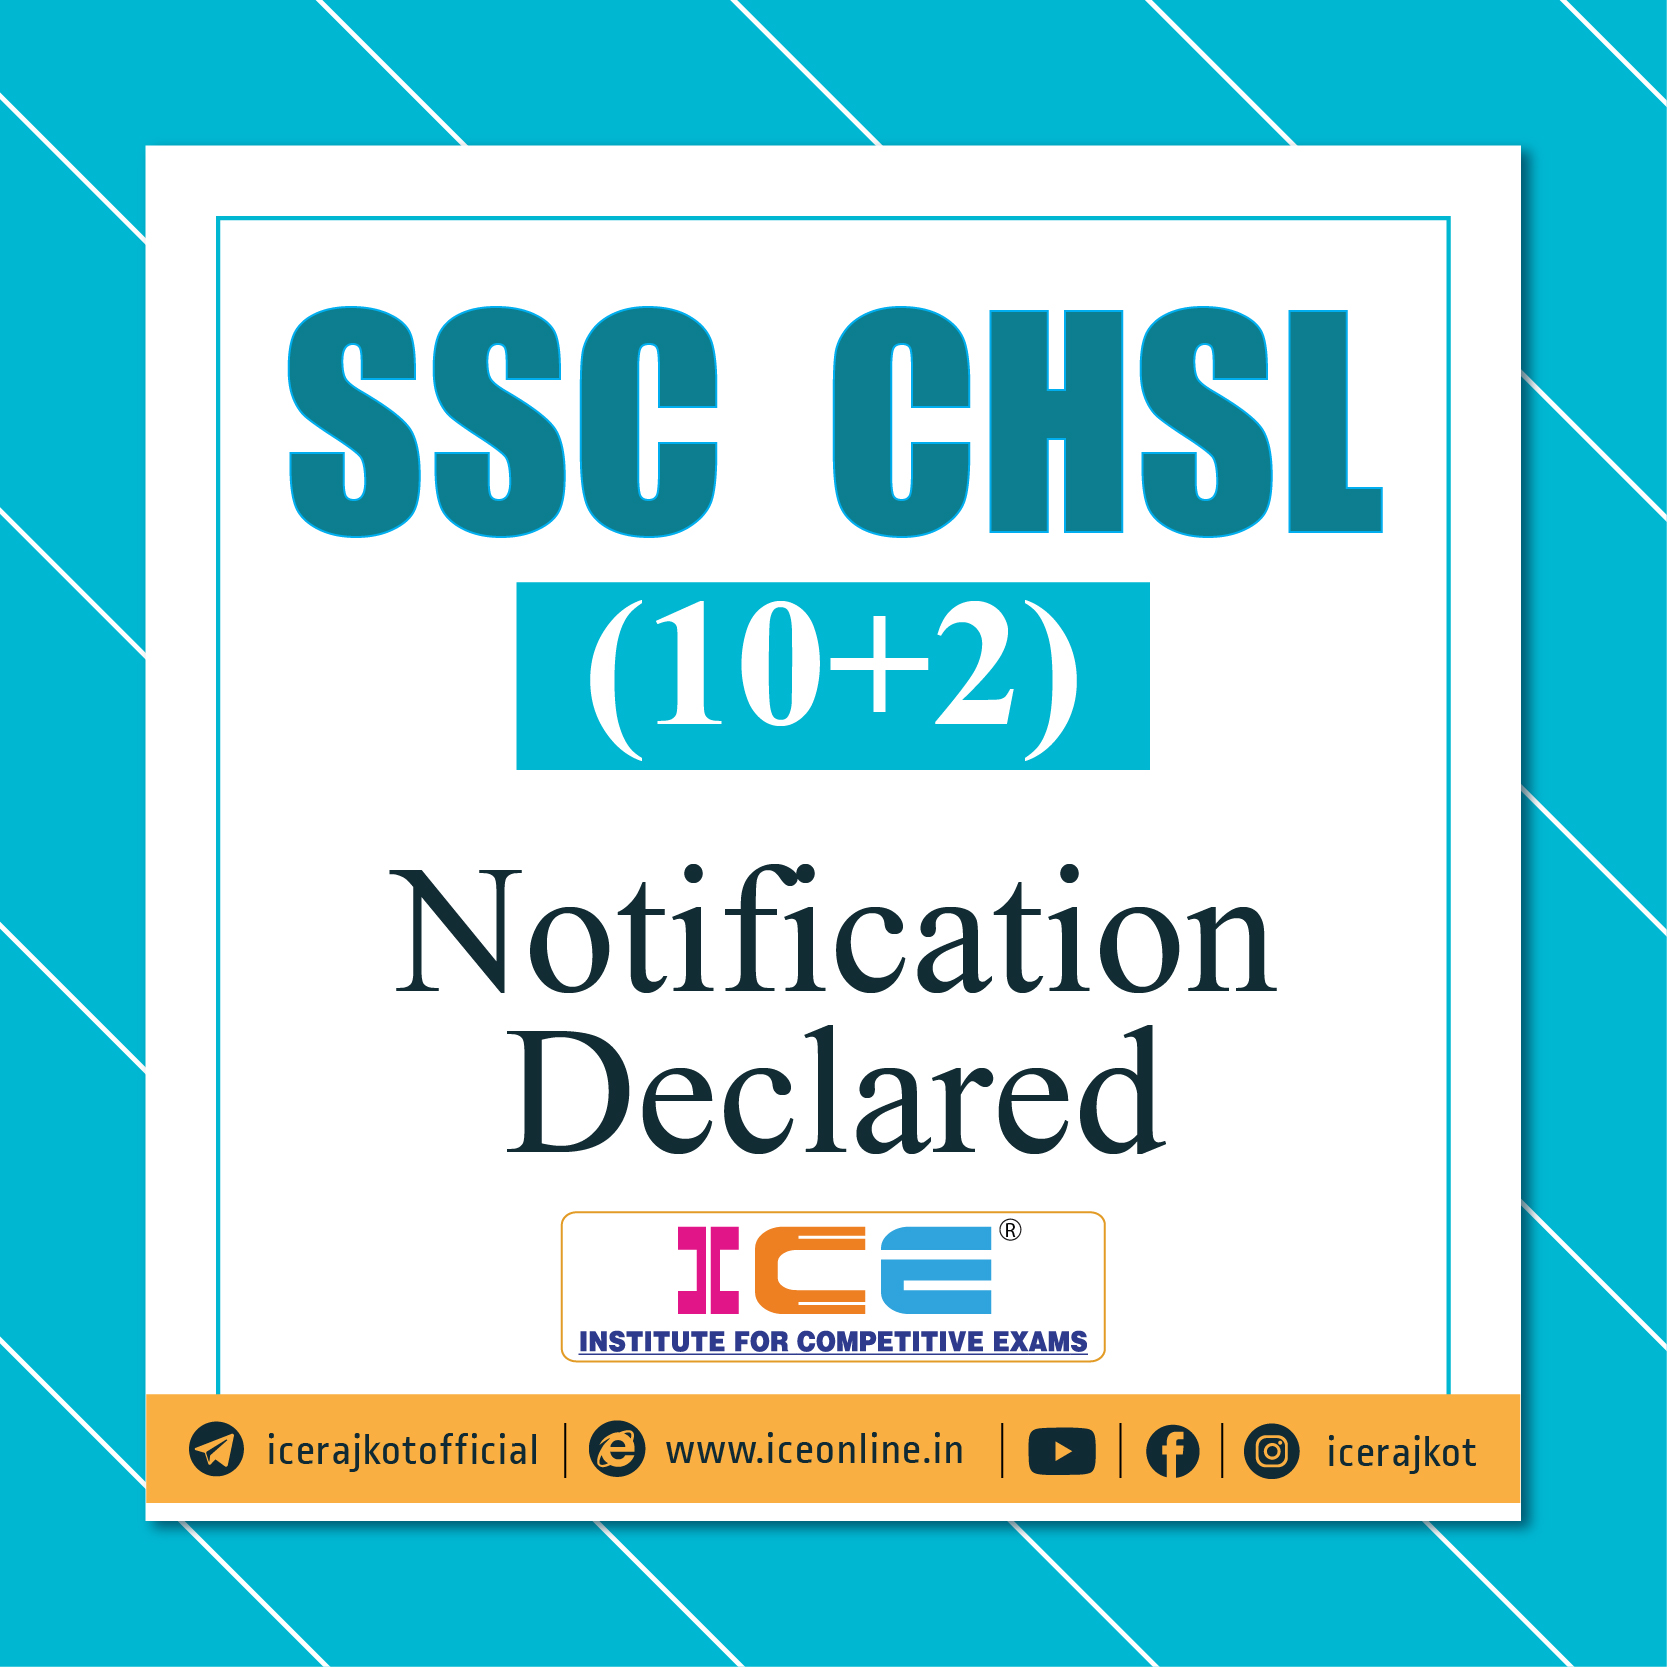 SSC CHSL (10+2) Notification Declared